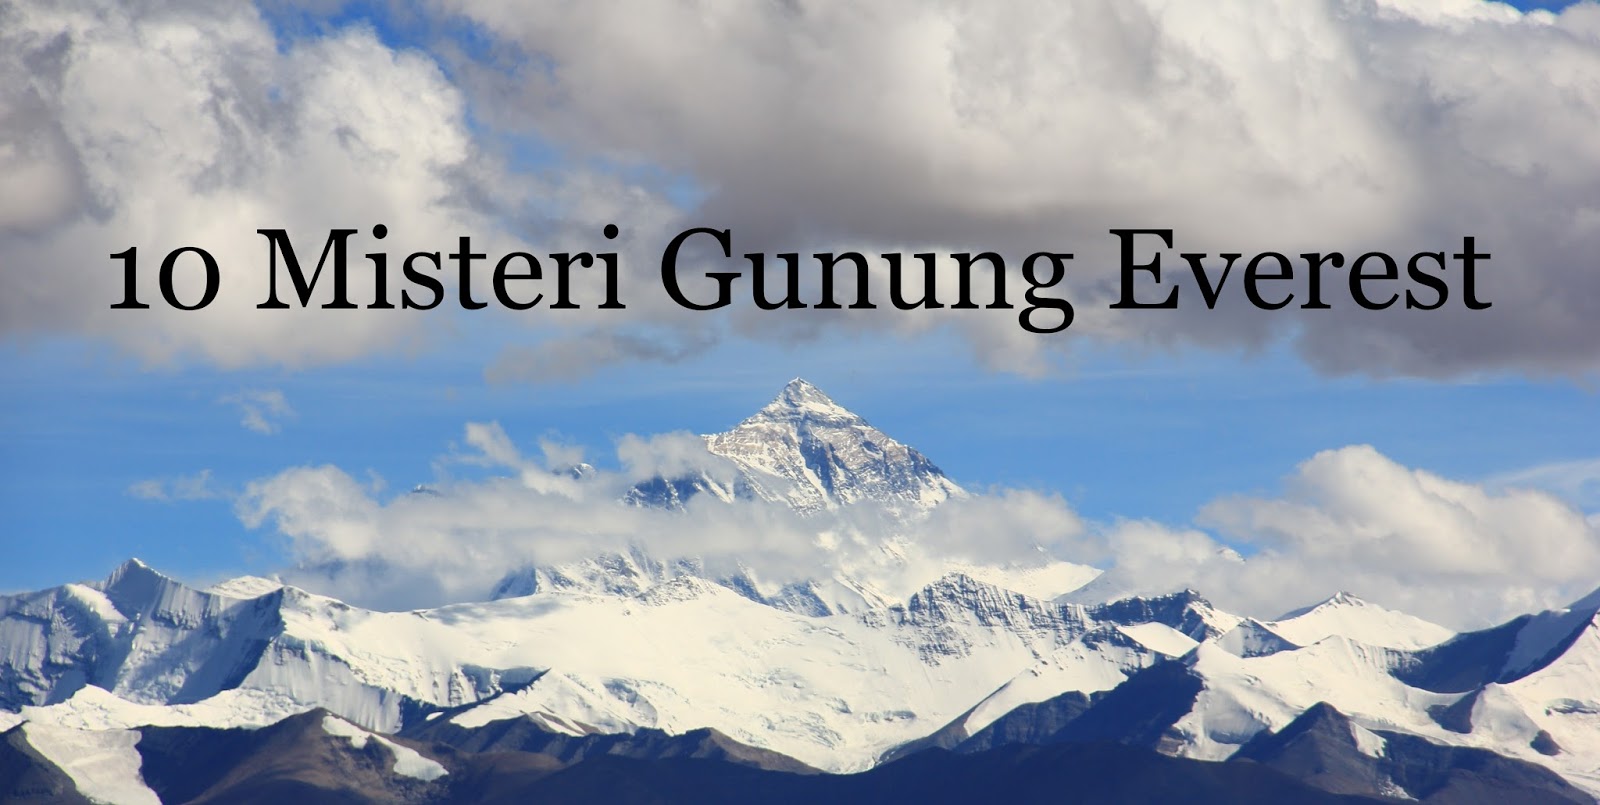 10 Misteri Gunung Everest yang Mengerikan Basecamp Para 